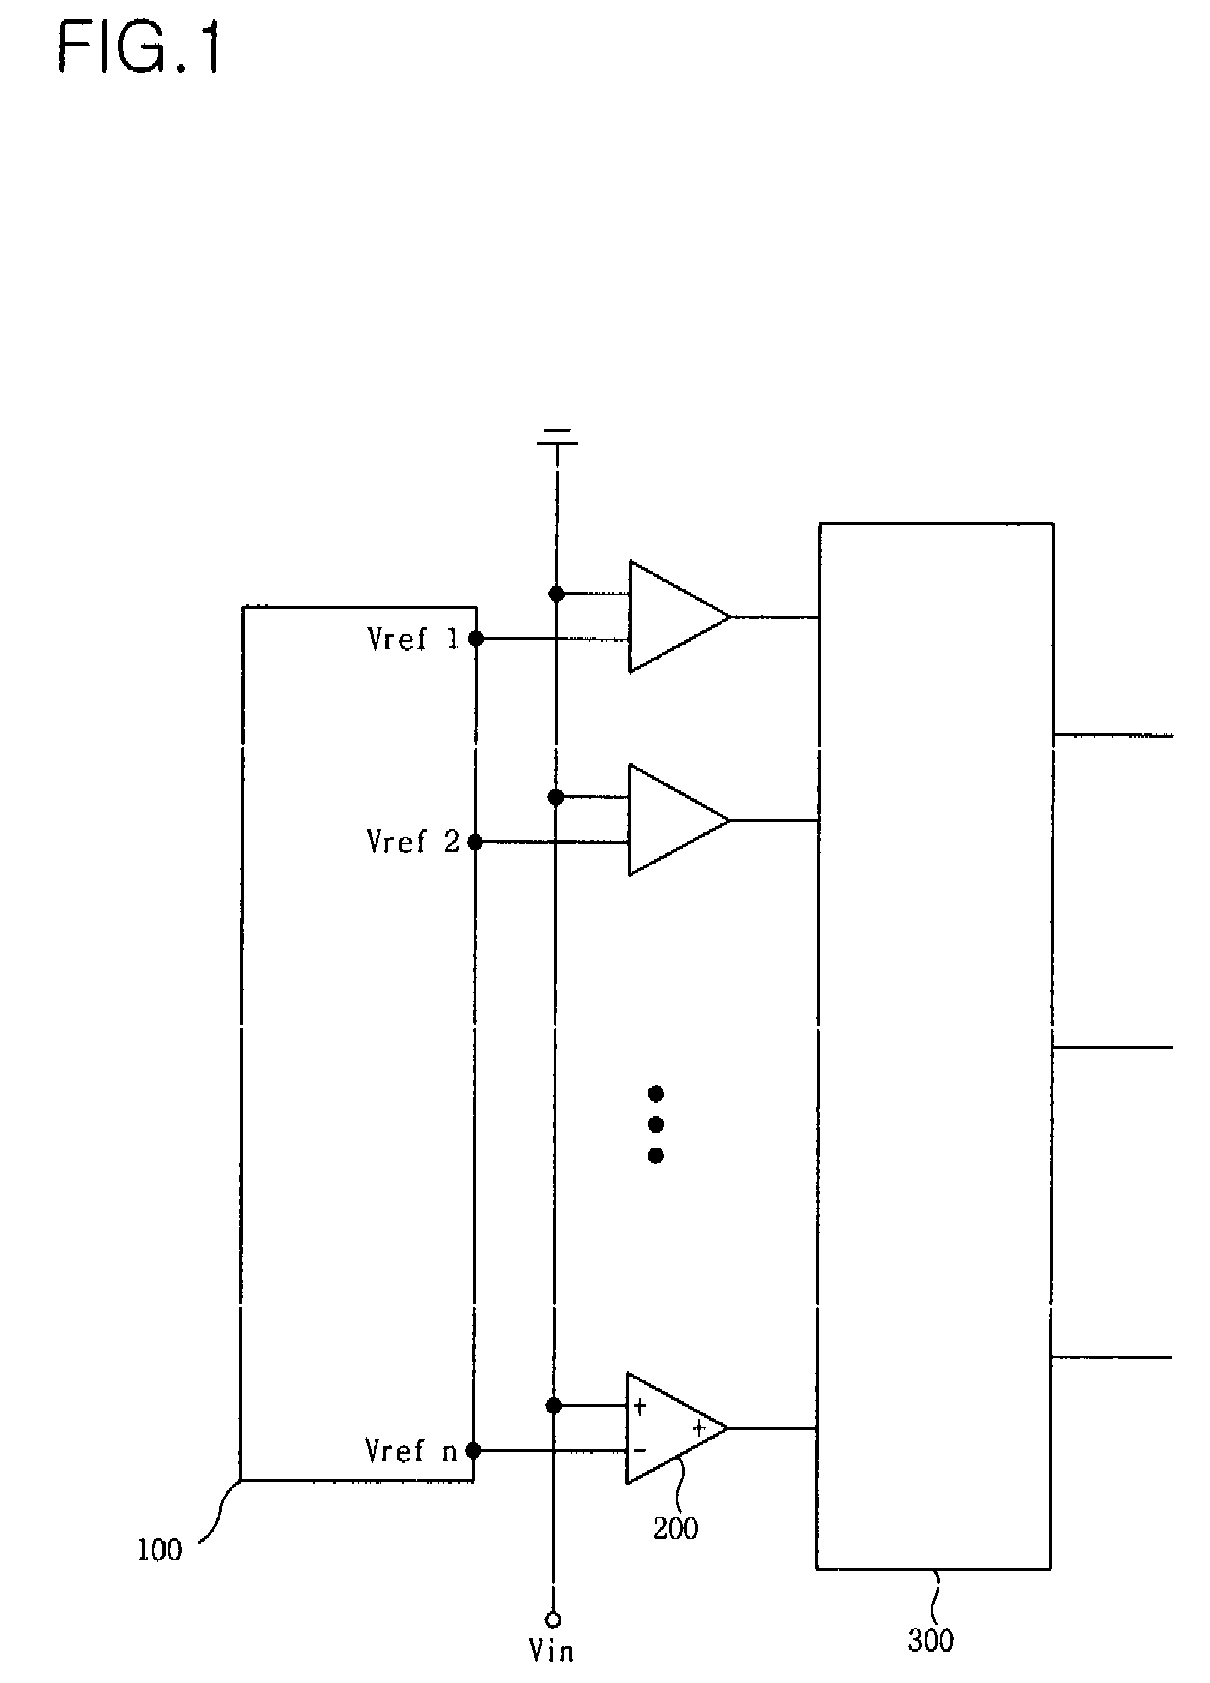 Reference voltage generator of analog-to-digital converter